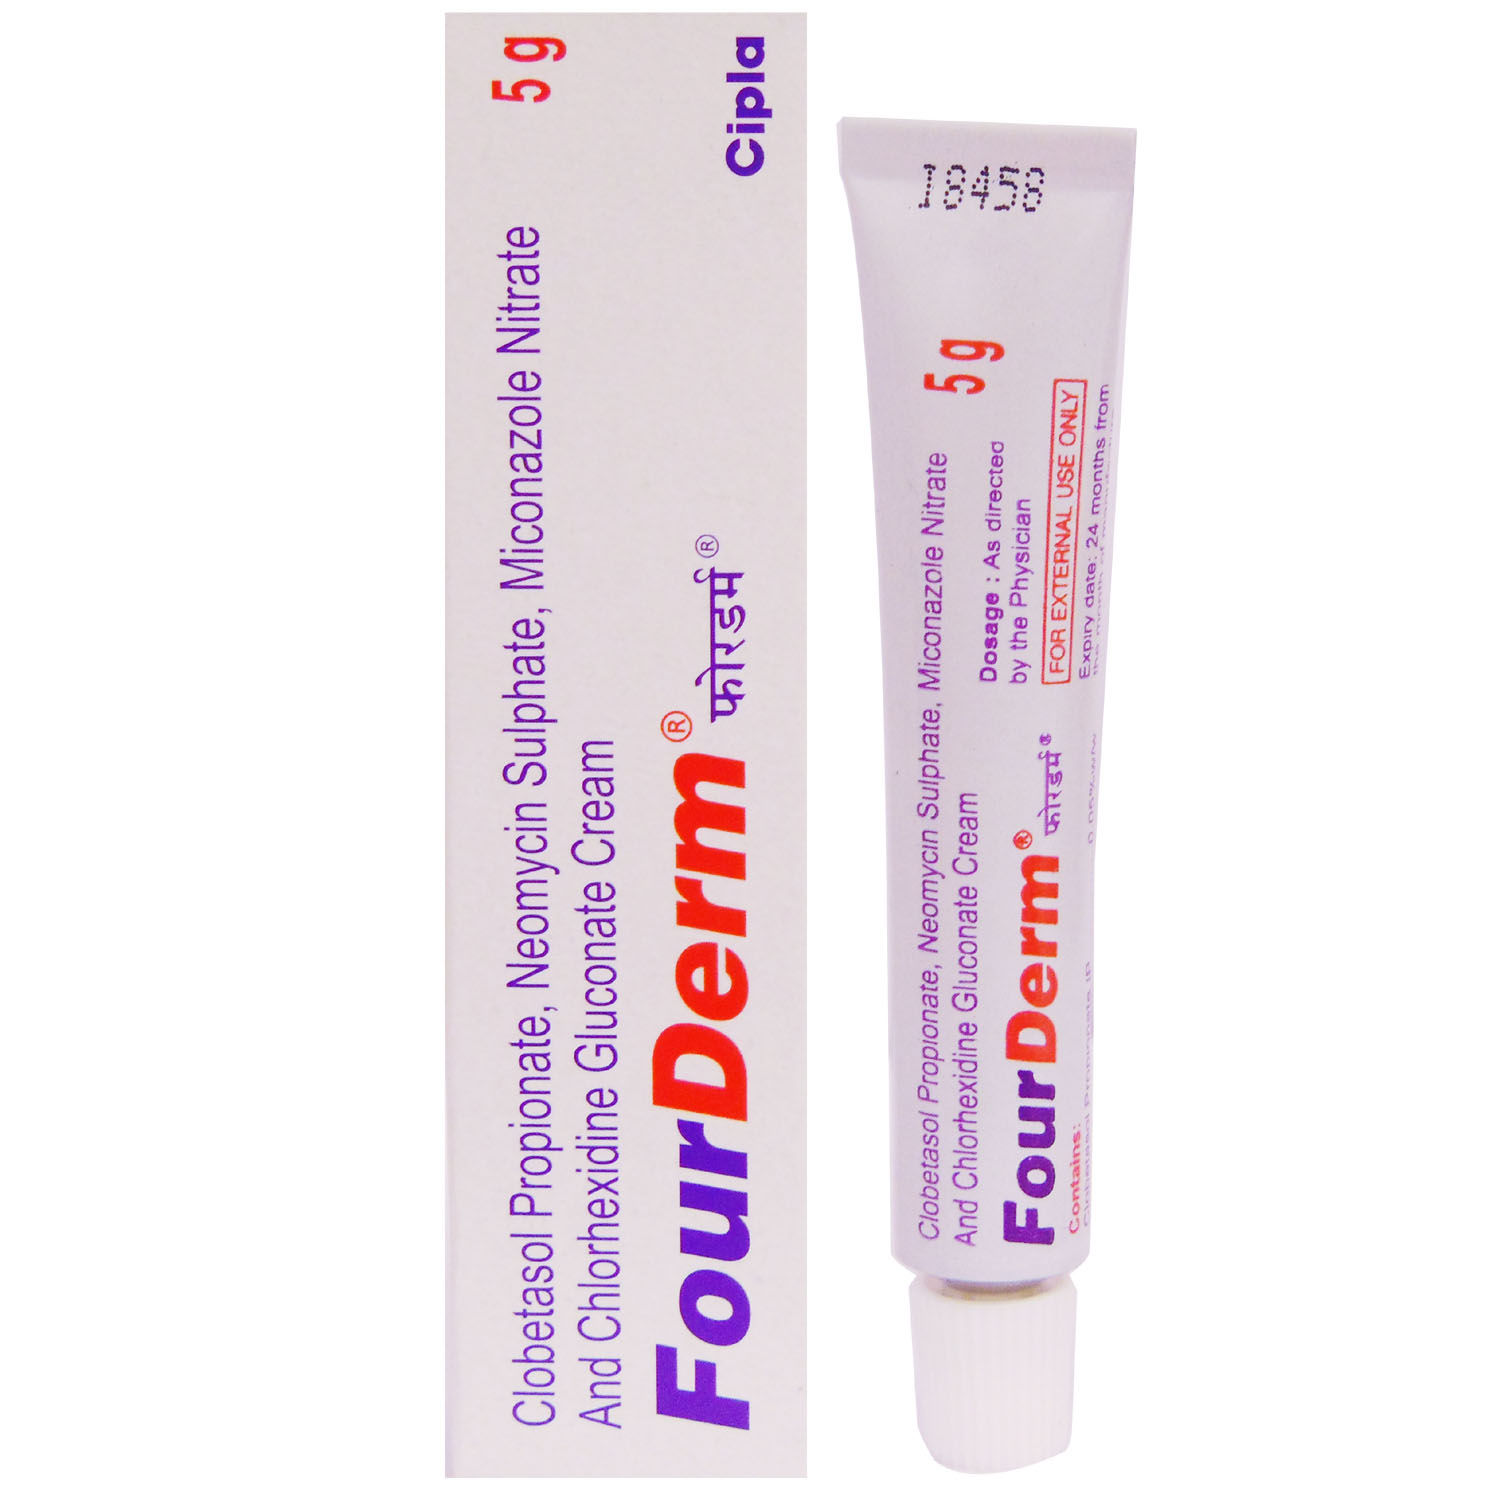 Fourderm Cream 5 gm, Pack of 1 CREAM